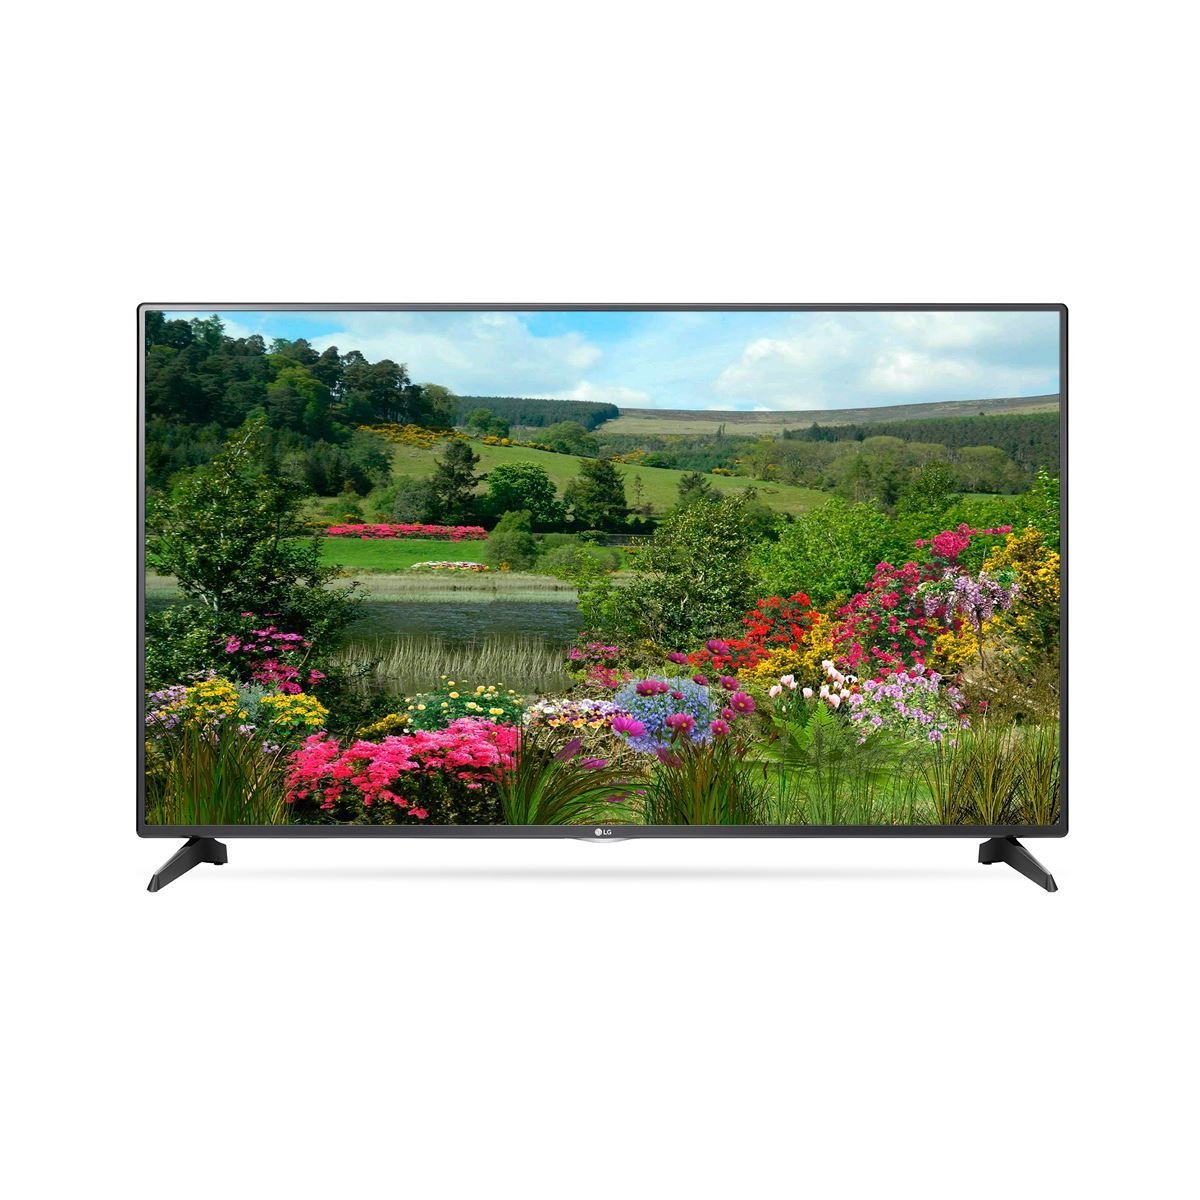 Pantalla LG 55” FHD Smart Tv 55LH5750